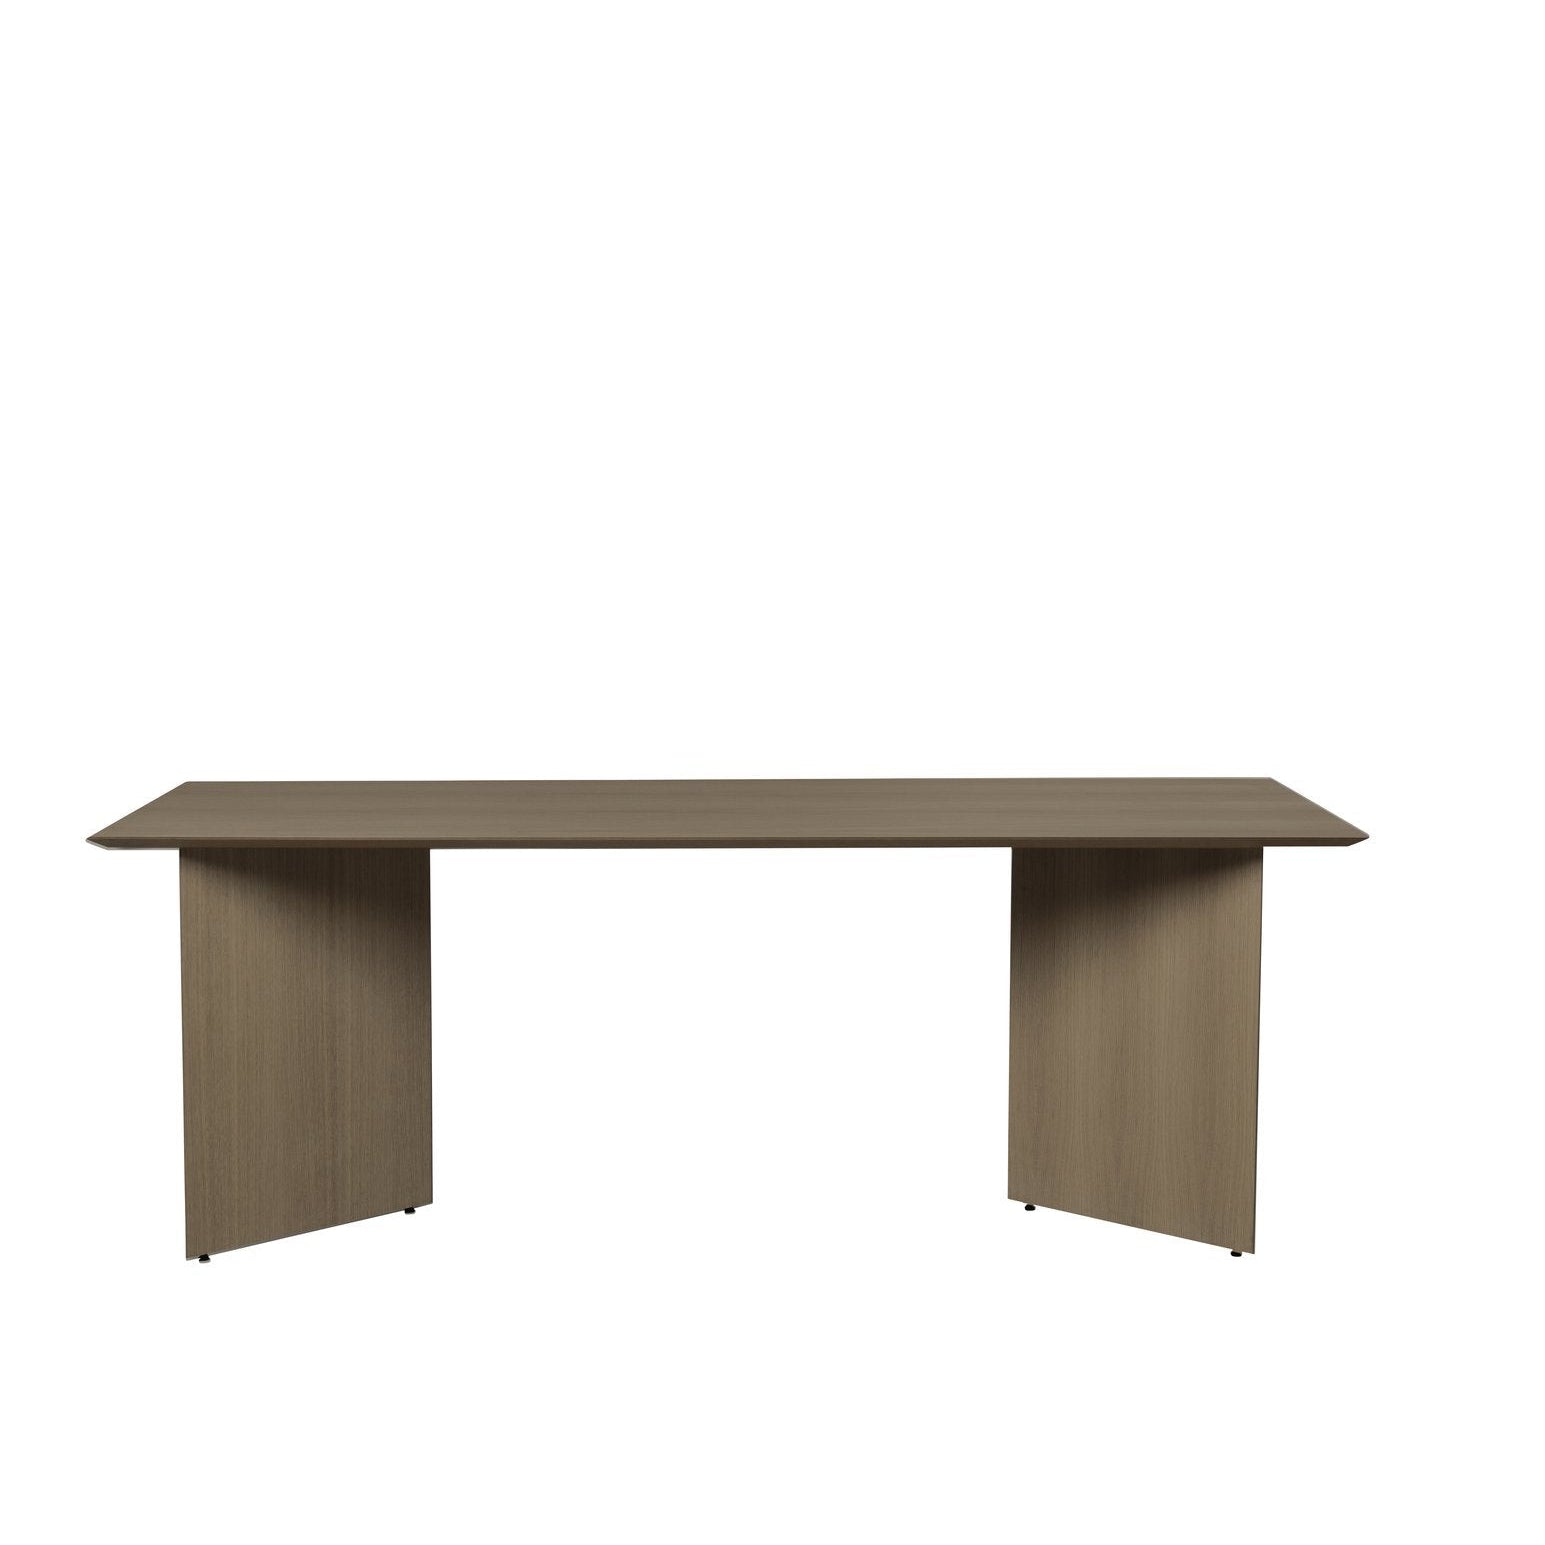 Ferm Living Mingle Table Top Invegandata scura, 210 cm